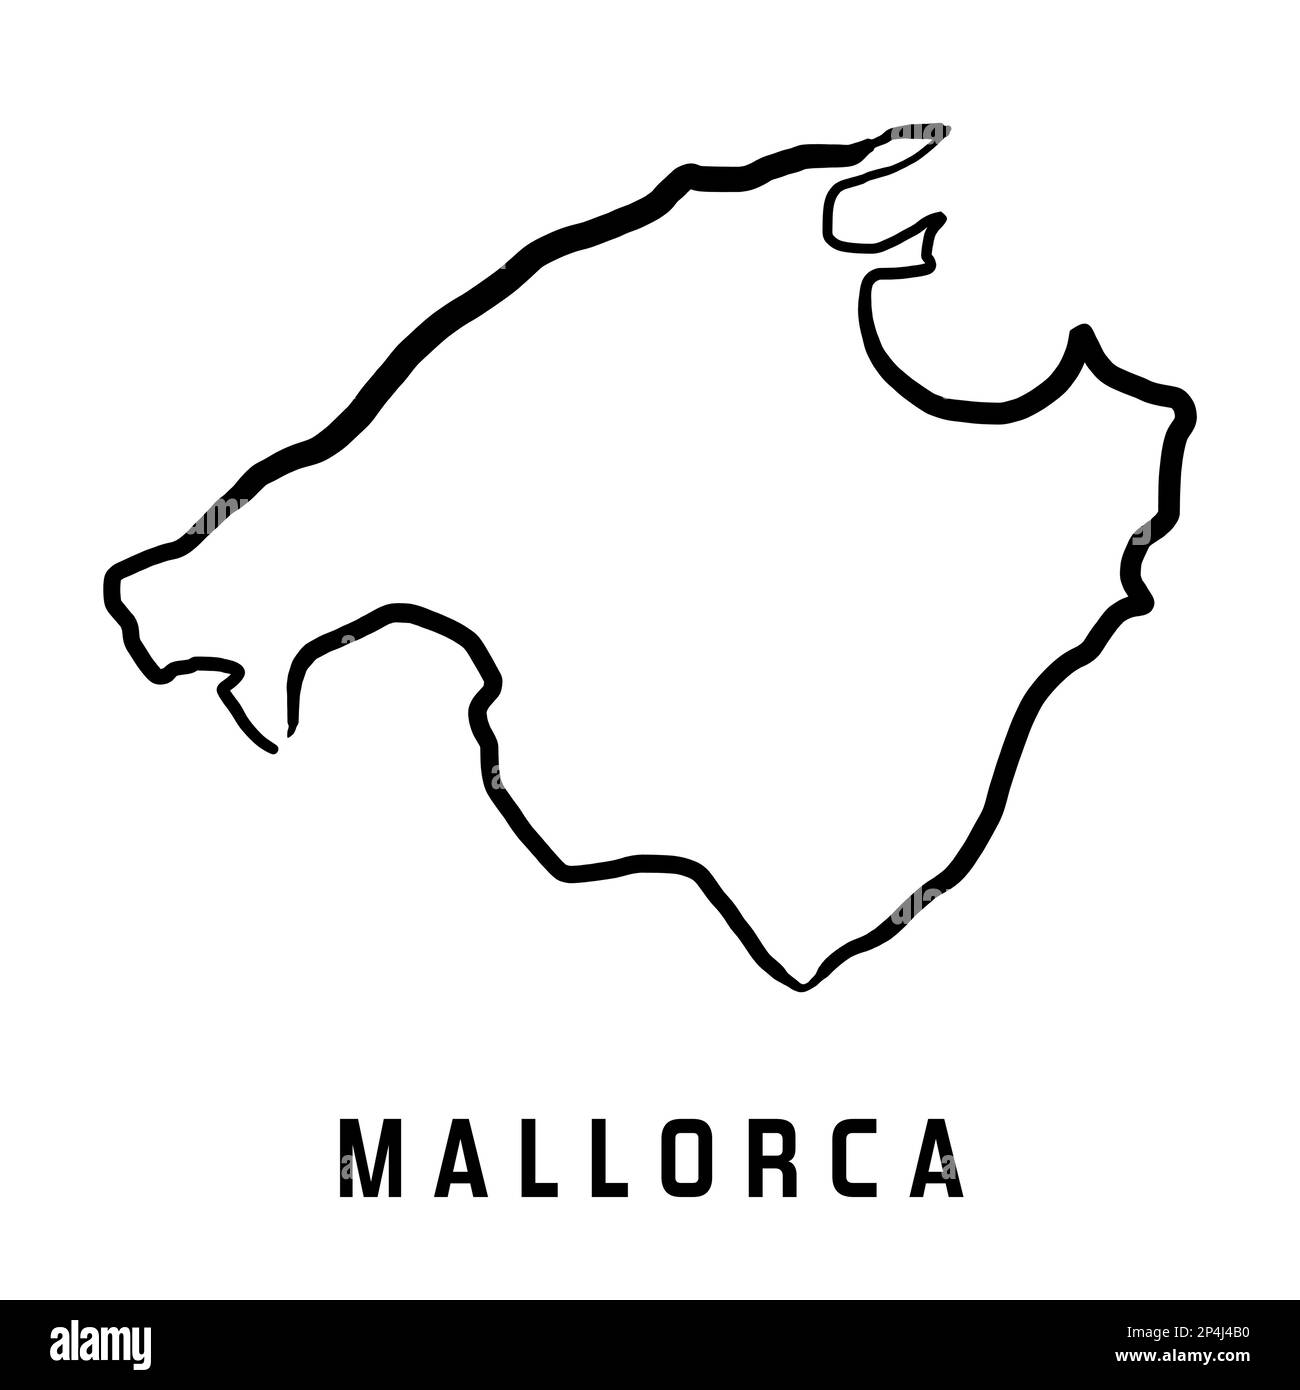 Mallorca-Inselkarte einfacher Umriss. Vektor handgezeichnete vereinfachte Stilkarte. Stock Vektor